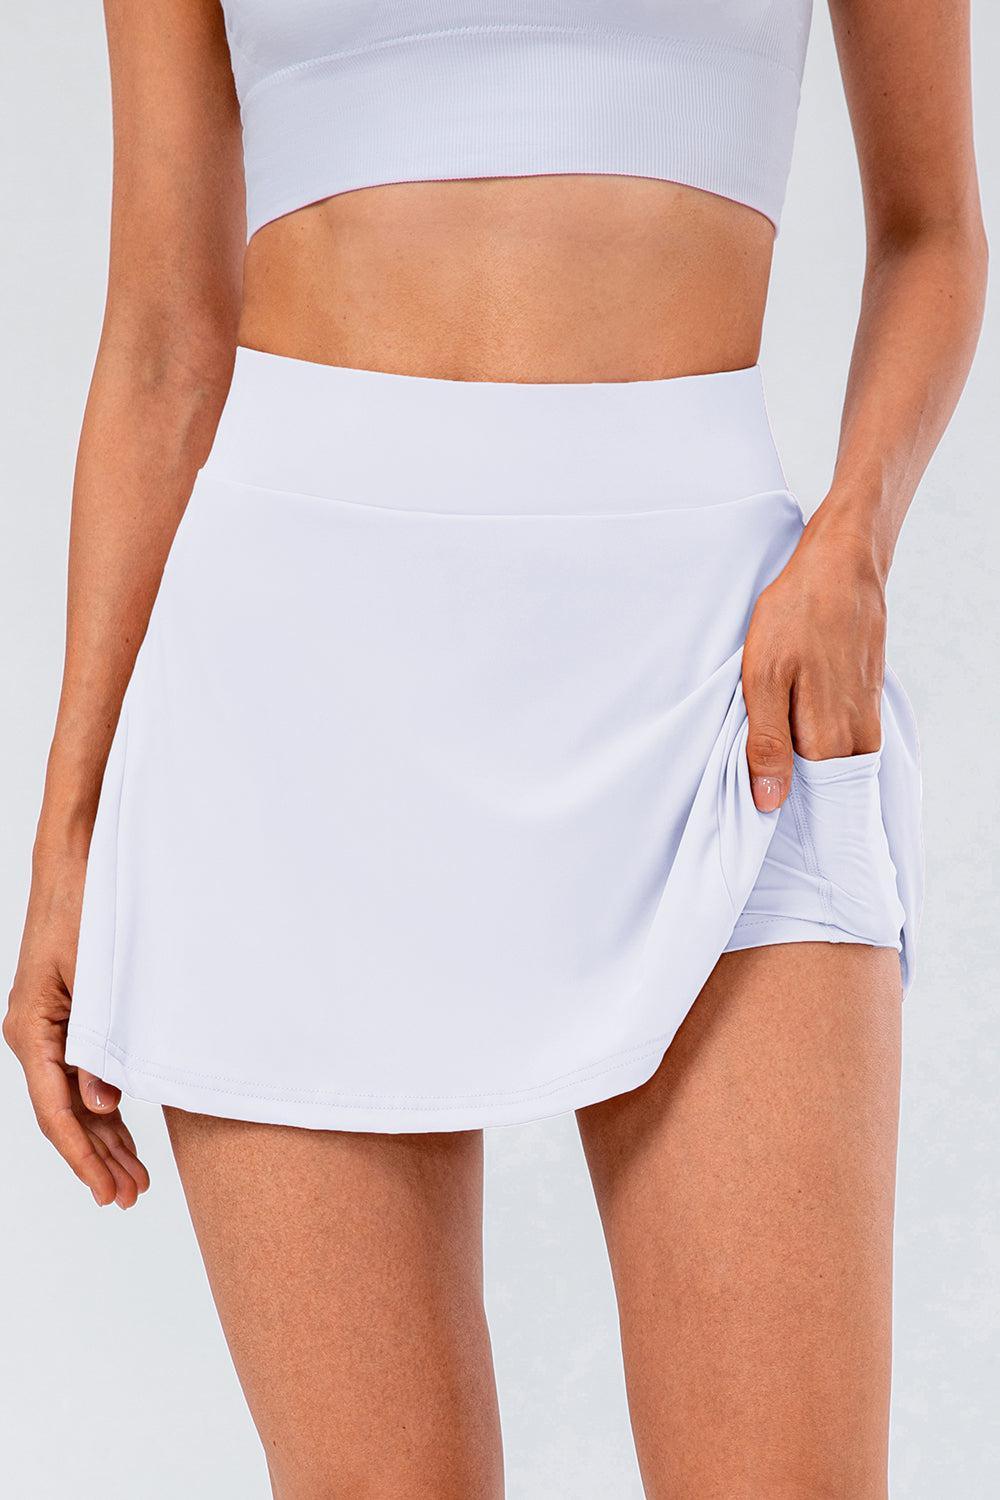 a woman wearing a white tennis skirt